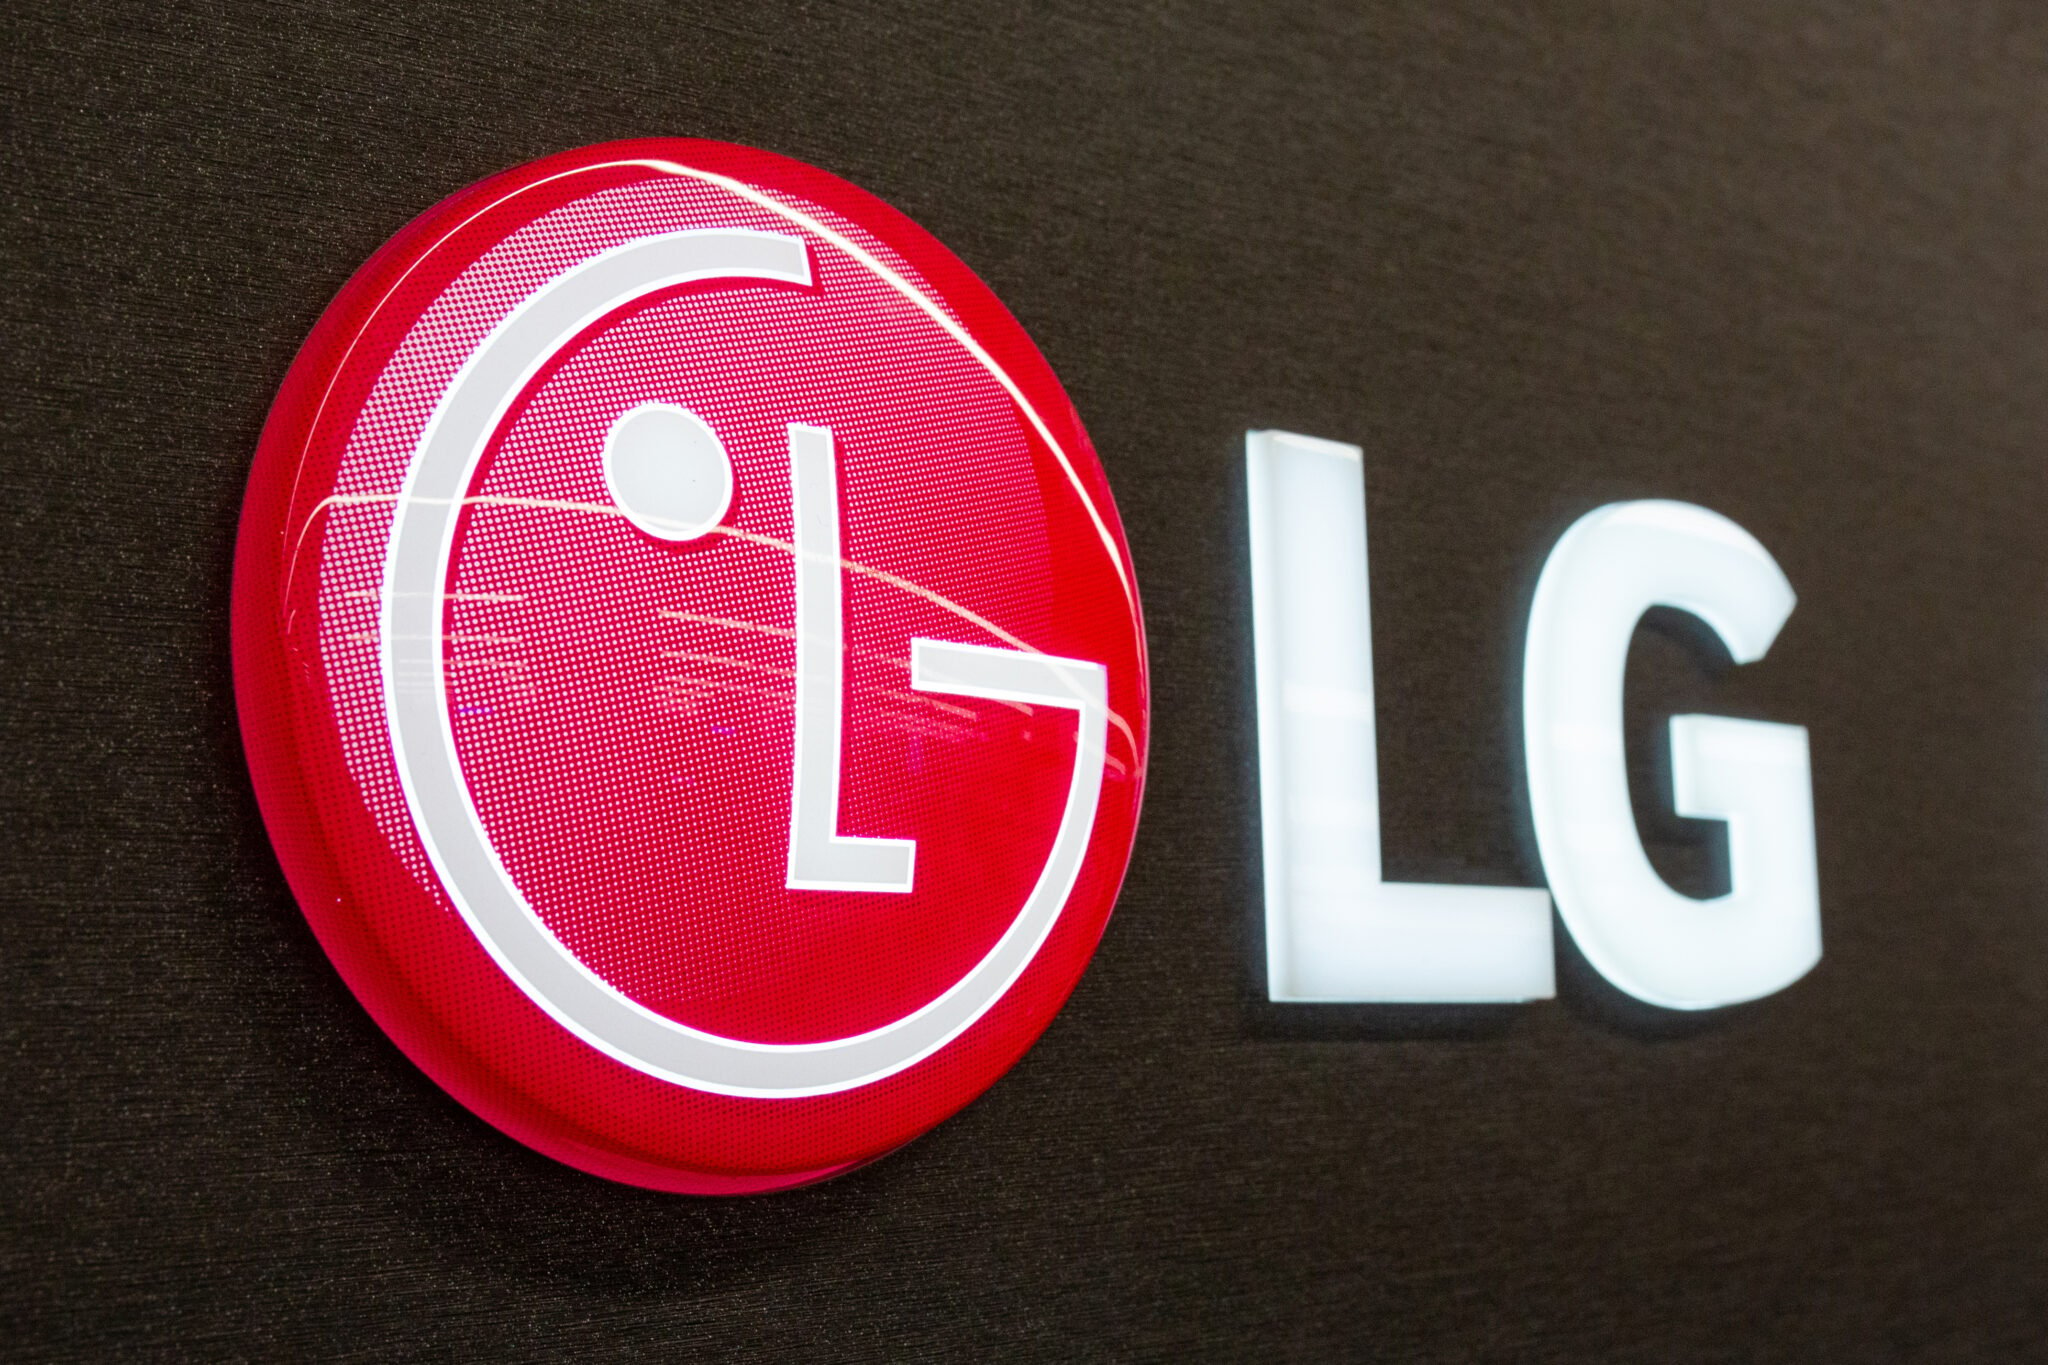 LG logo. Bright neon LG sign. South Korean multinational electronics company, LG Electronics. Minsk, Belarus - February 2, 2022